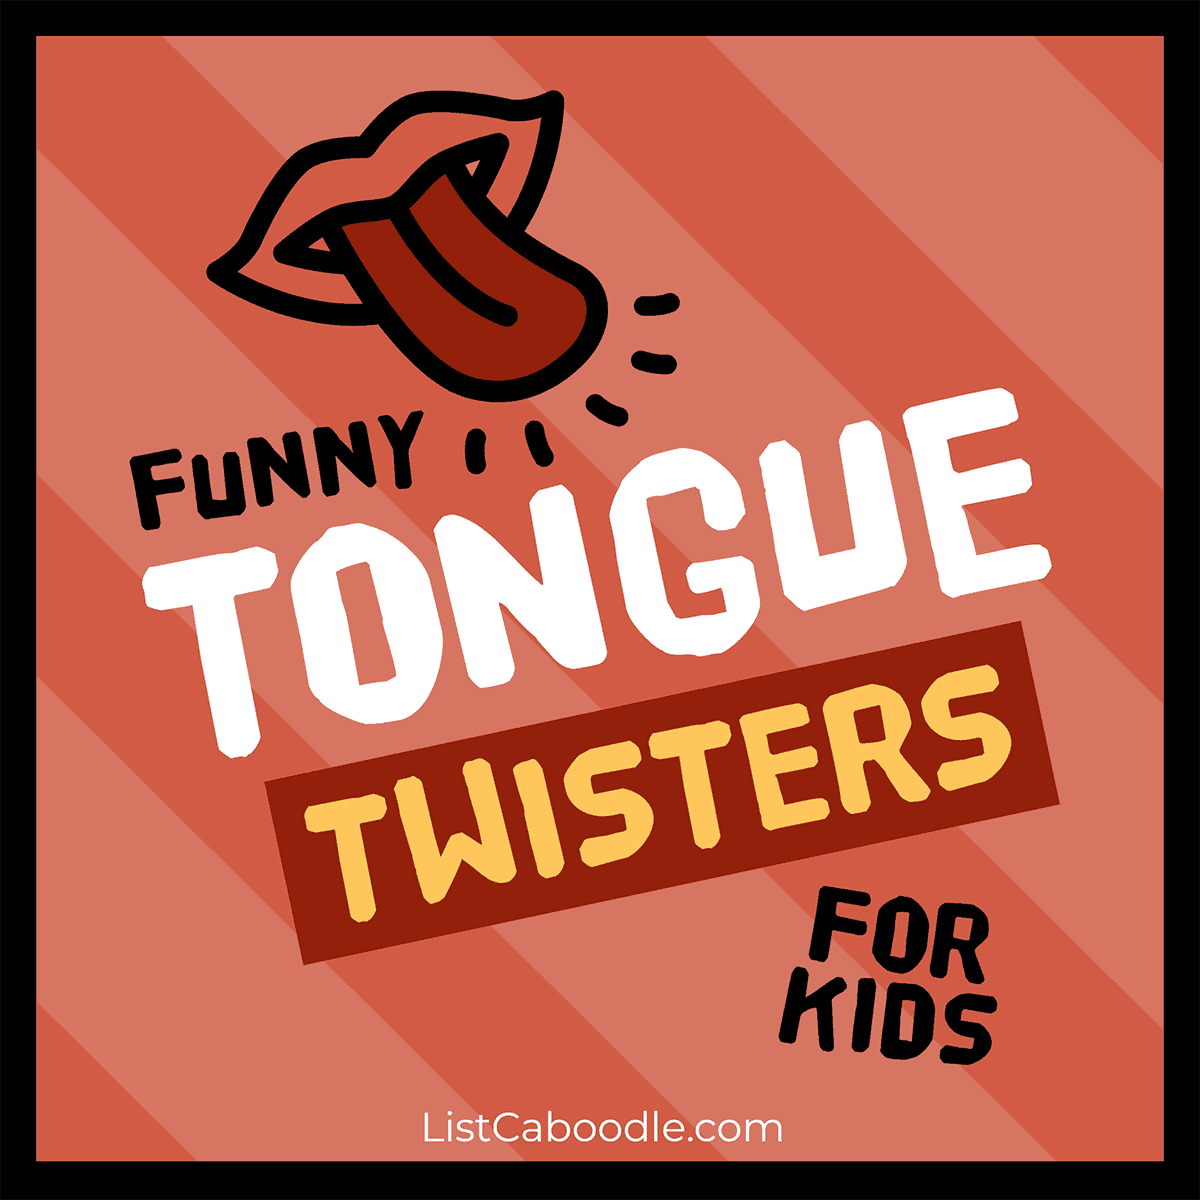 101+ Funny Tongue Twisters For Kids (Fun Wordplay!)